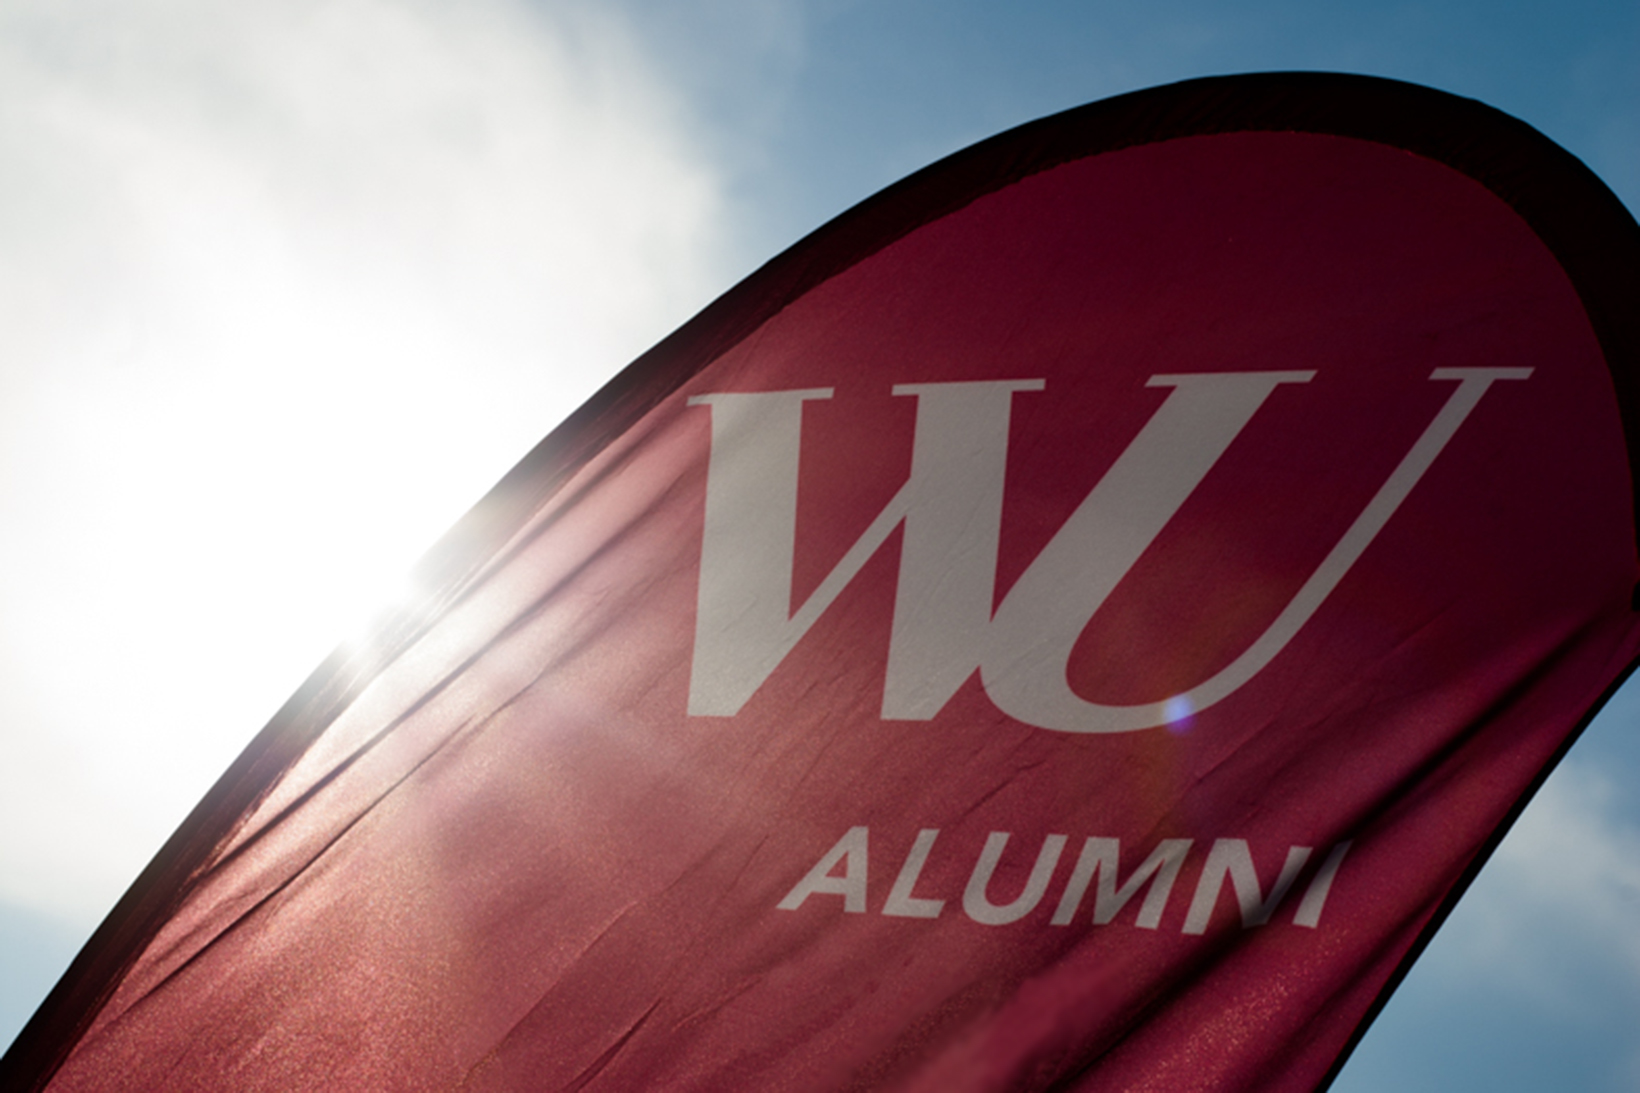 Fahne des WU Alumni Clubs (c) 